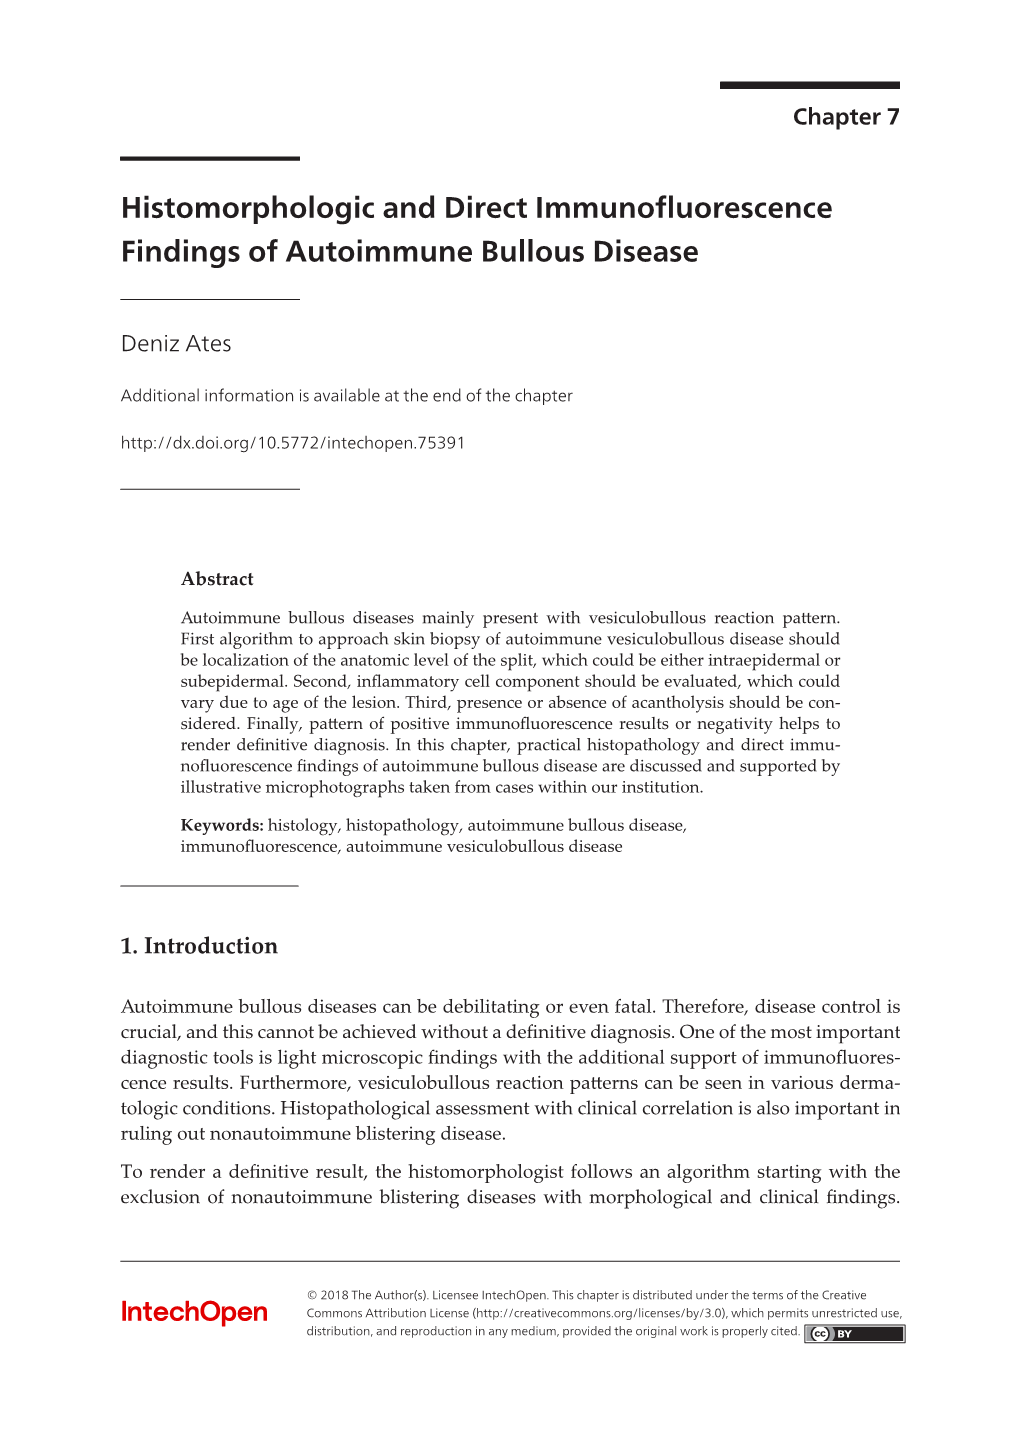 Histomorphologic and Direct Immunofluorescence Findings of Autoimmune Bullous Disease